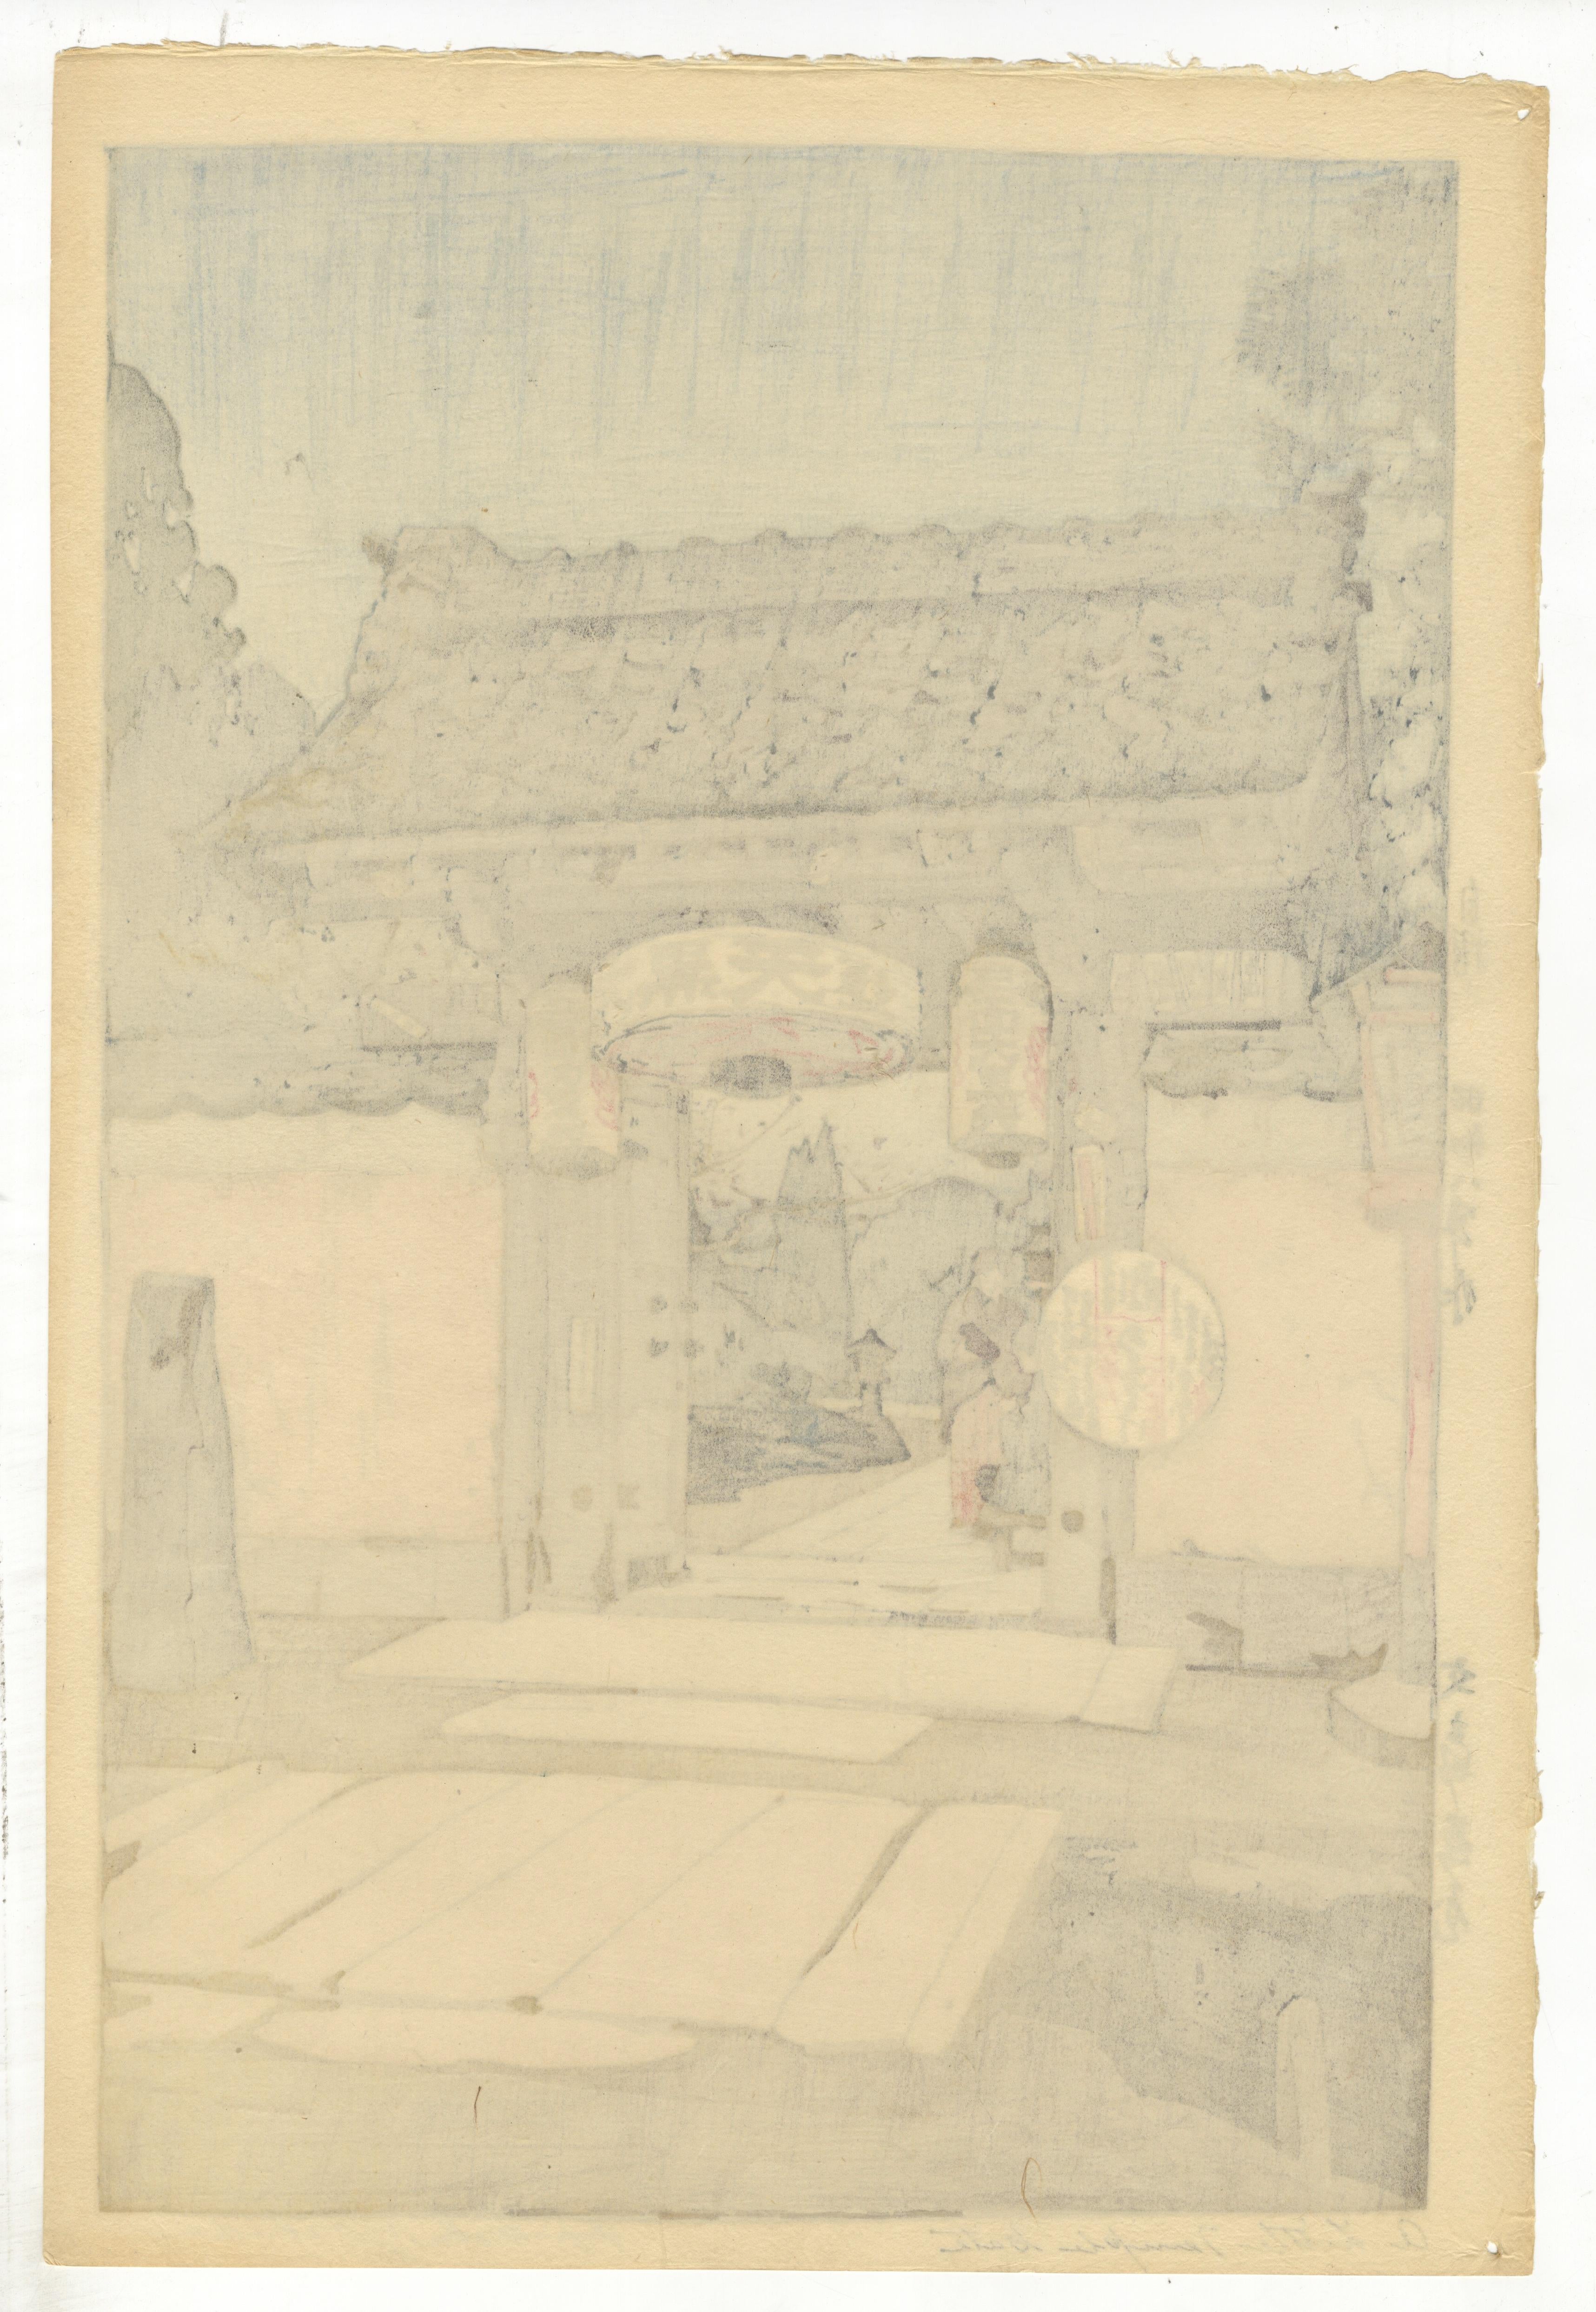 Artist: Hiroshi Yoshida (1876-1950)
Title: A Little Temple Gate 
Date: 1933
Dimensions: 27.8 x 40 cm
Condition: Edges slightly darkened. Pinholes top and bottom left corners. Faint dark smudges along left and right margins. Original pencil